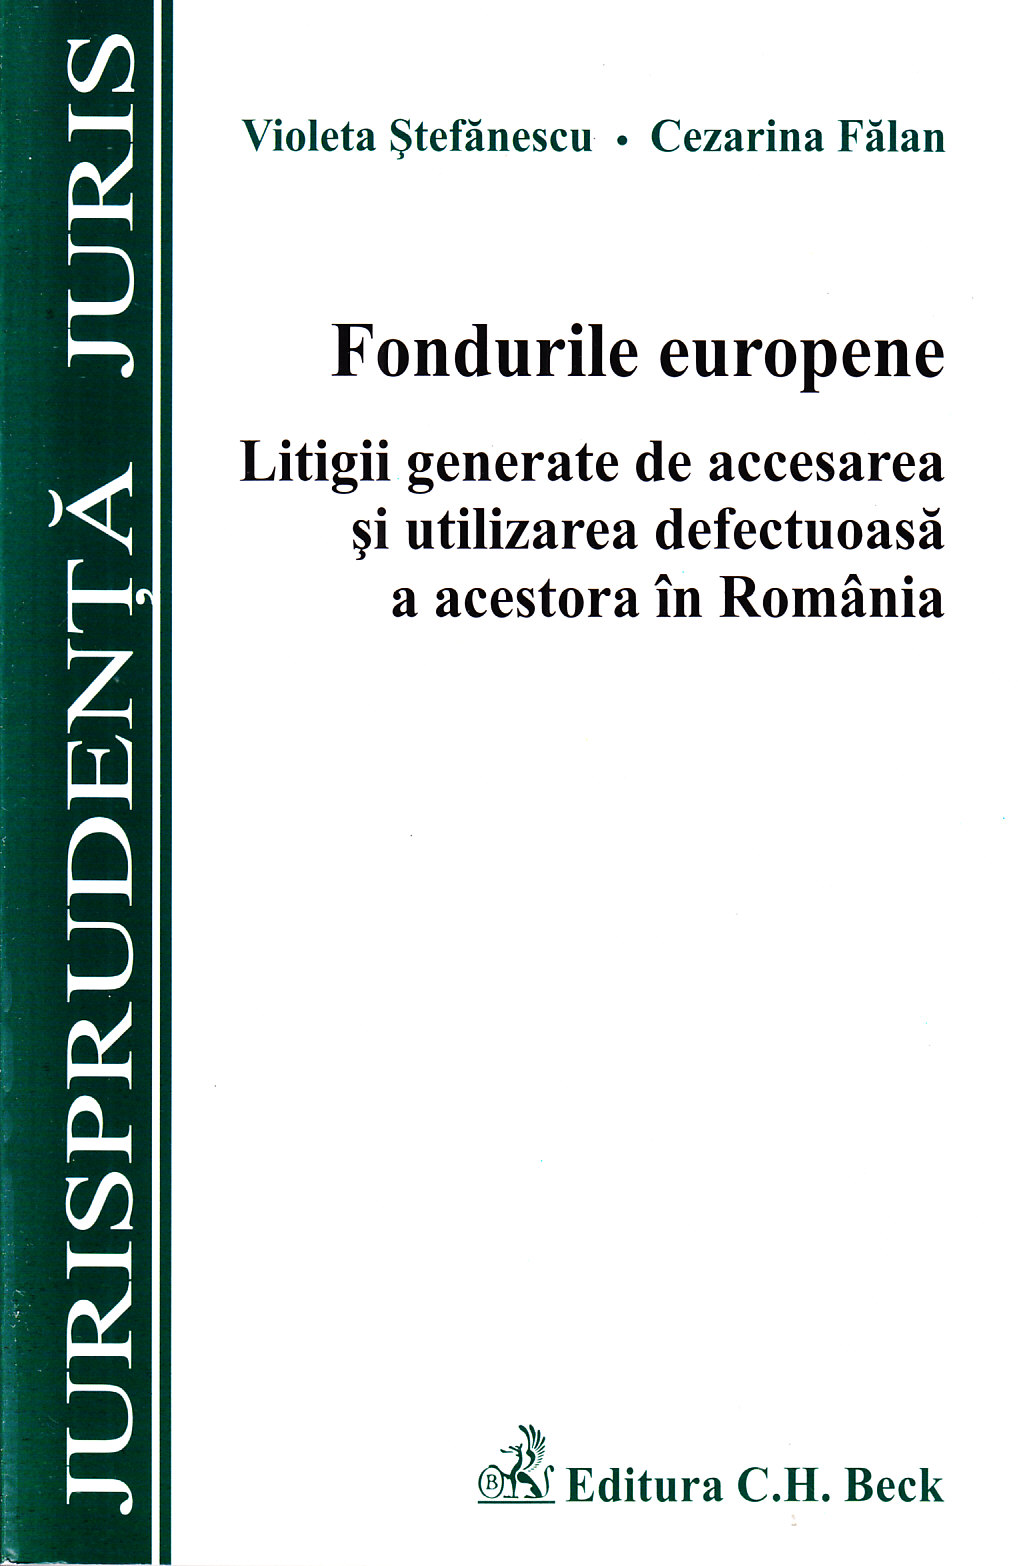 Fondurile europene - Violeta Stefanescu, Cezarina Falan